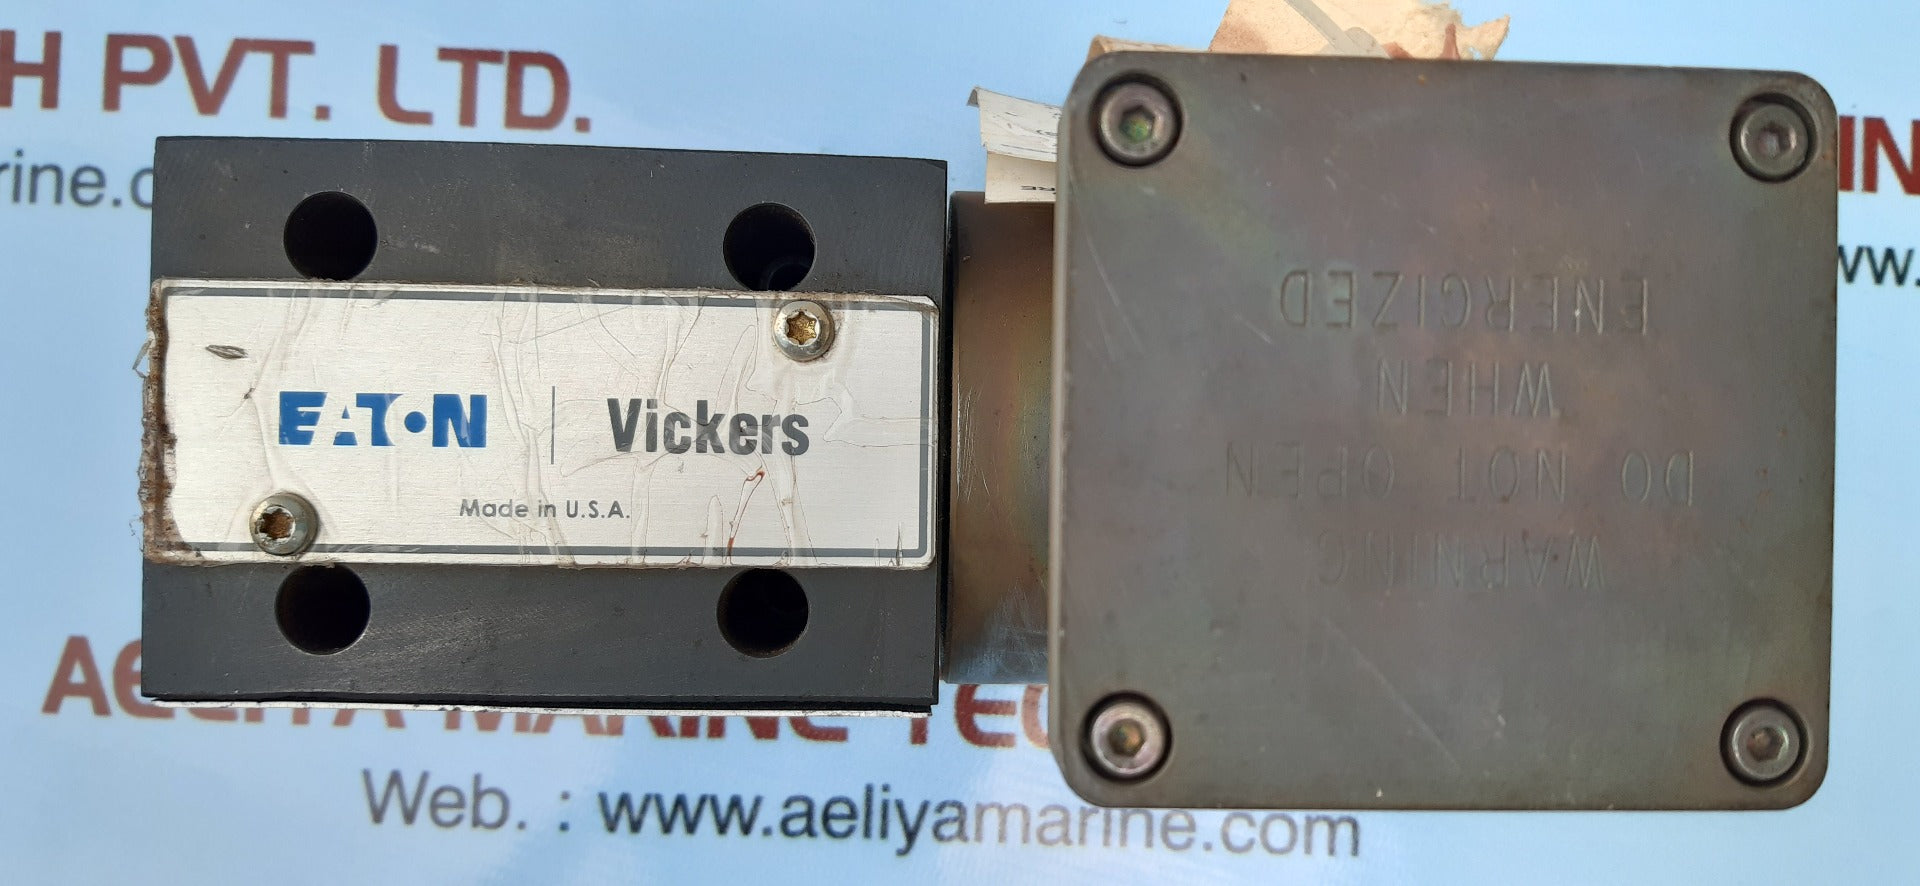 Eaton vickers dg4v4-012a-m-x1-a4-10-h13s directional control valve